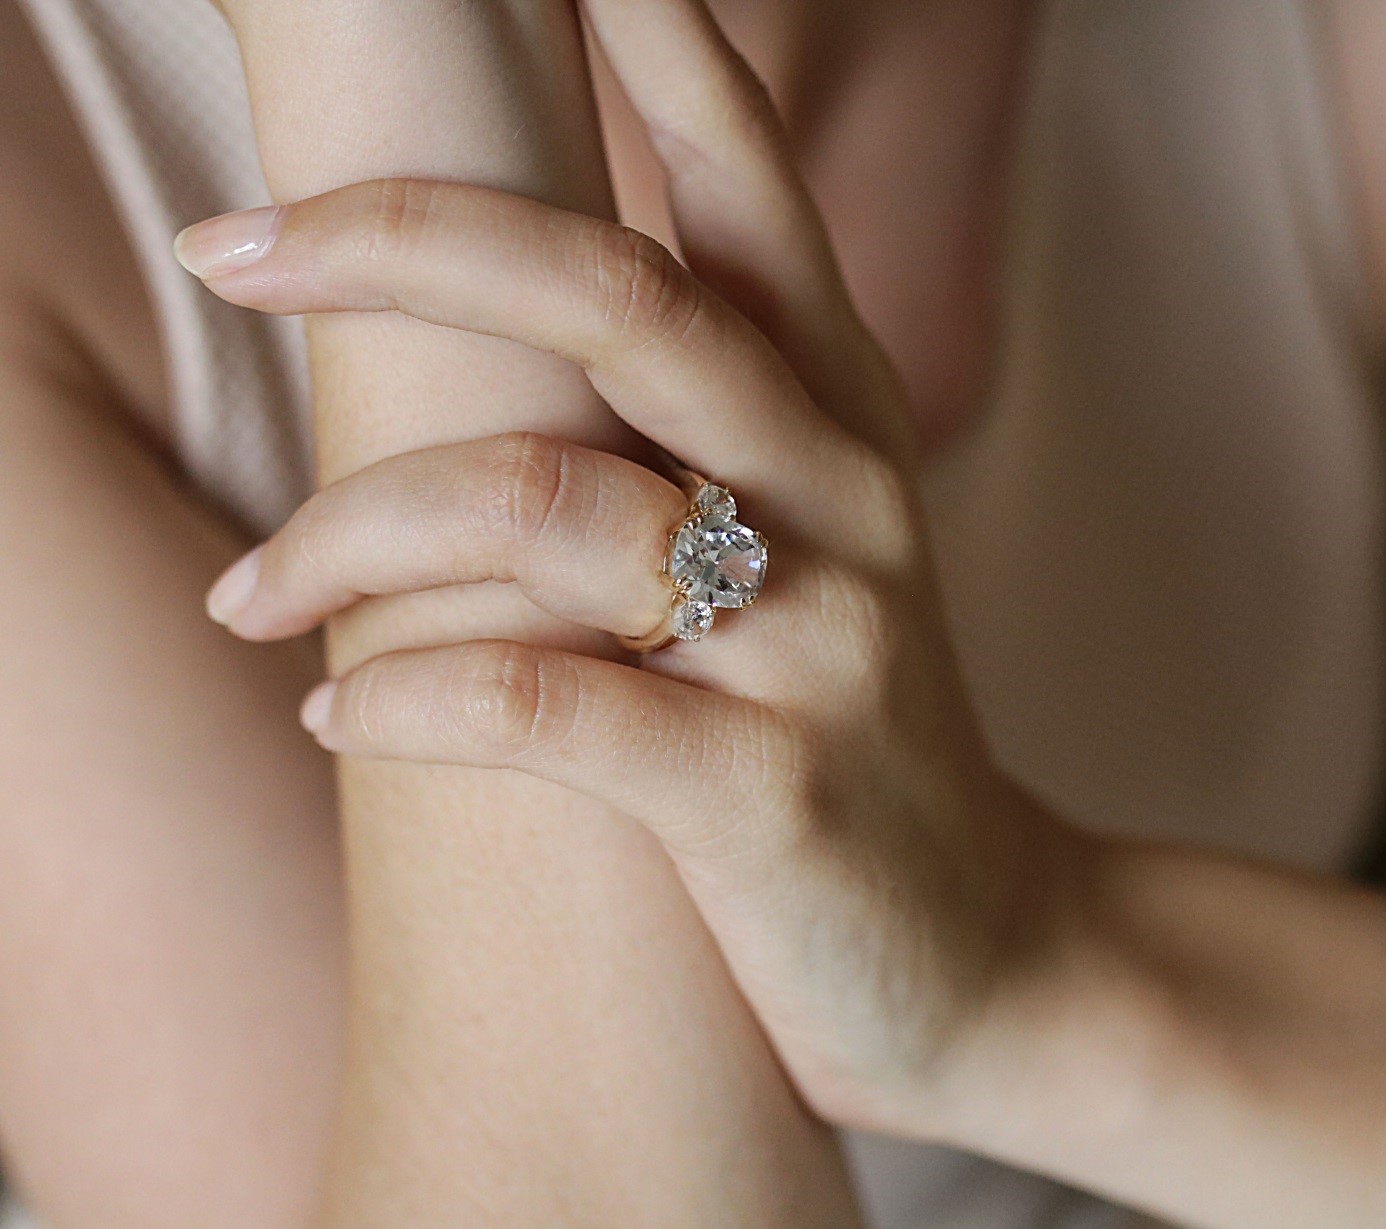 Why choose a Cushion Cut Engagement Ring?